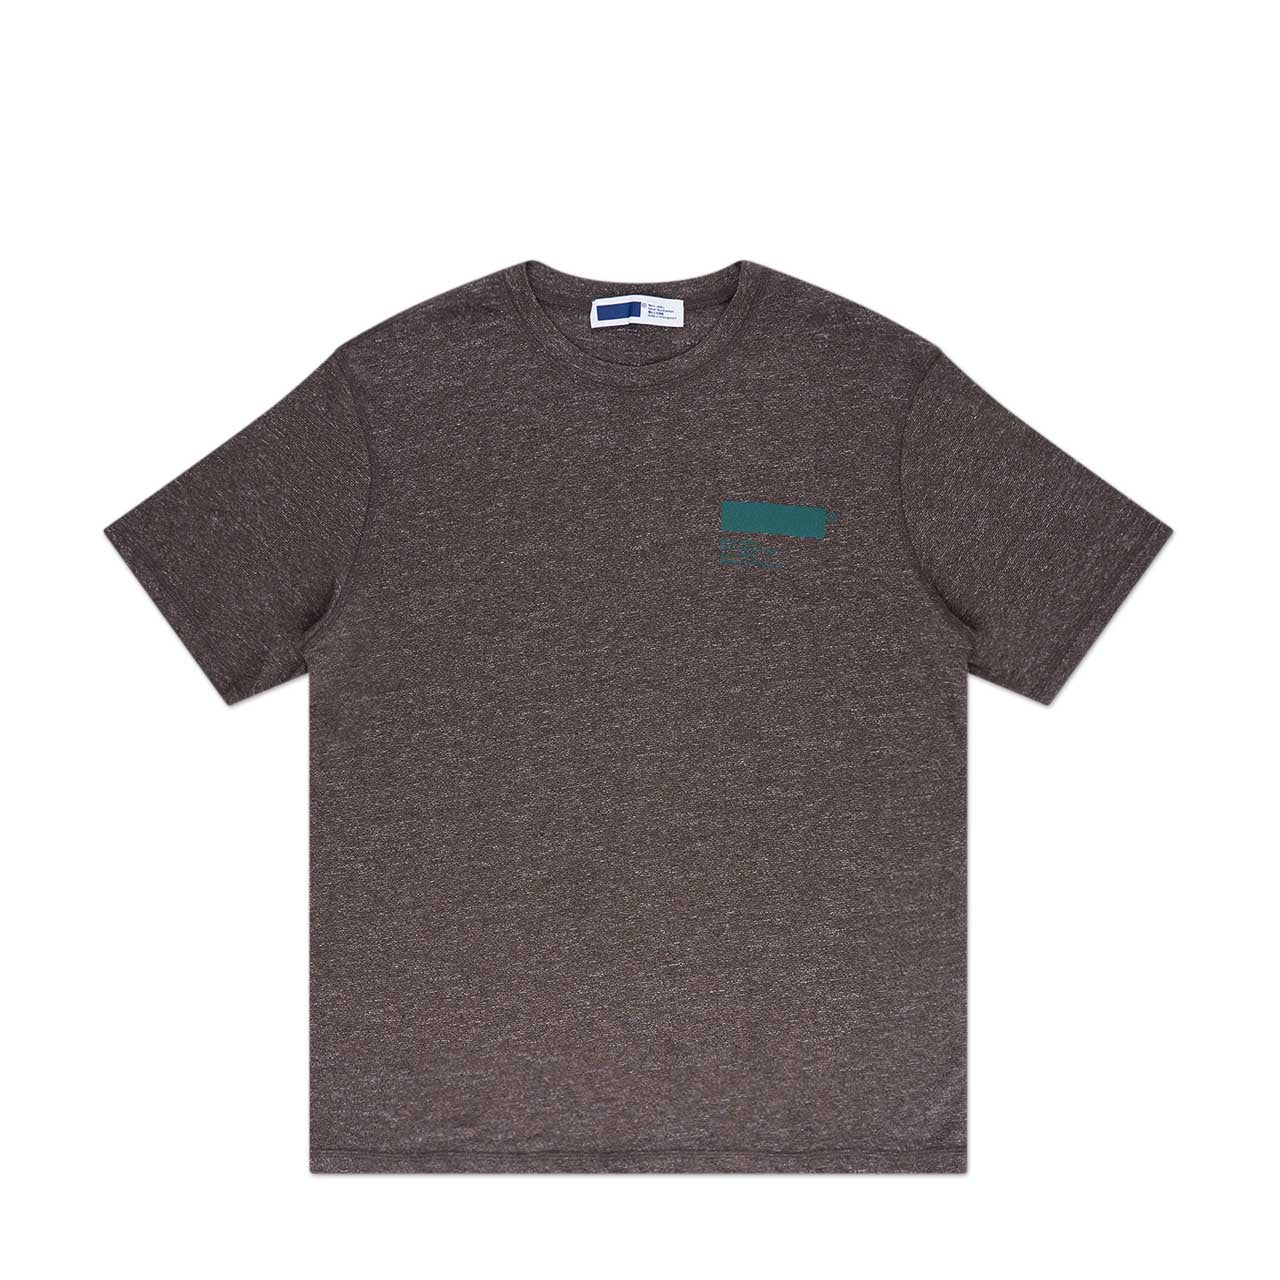 affxwrks standardised t-shirt (brown)